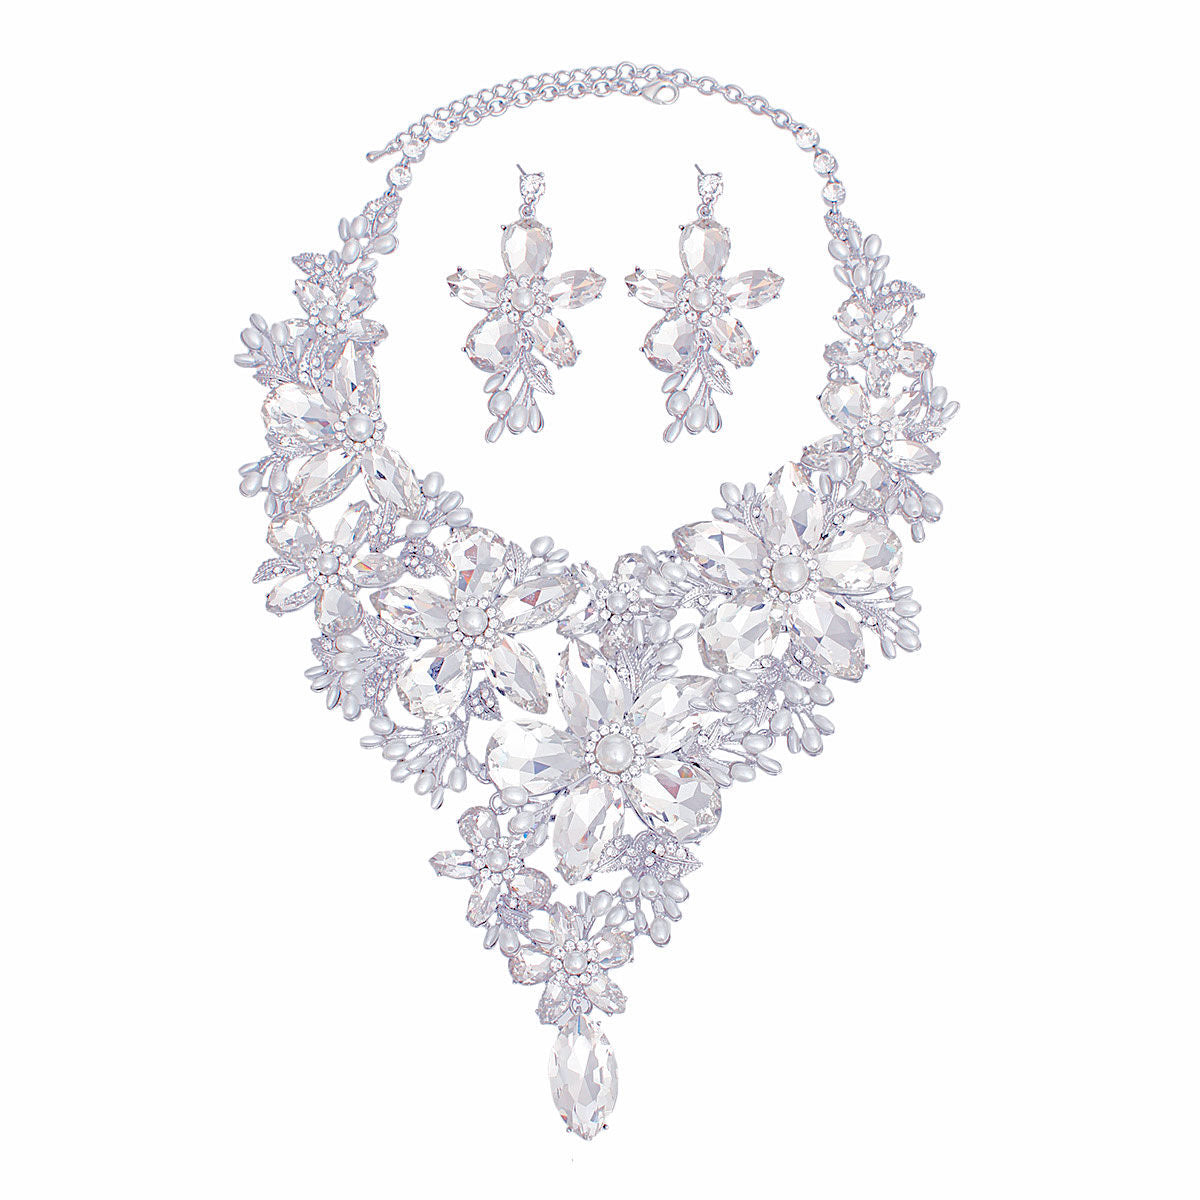 Crystal Necklace Silver Flower Bib for Women